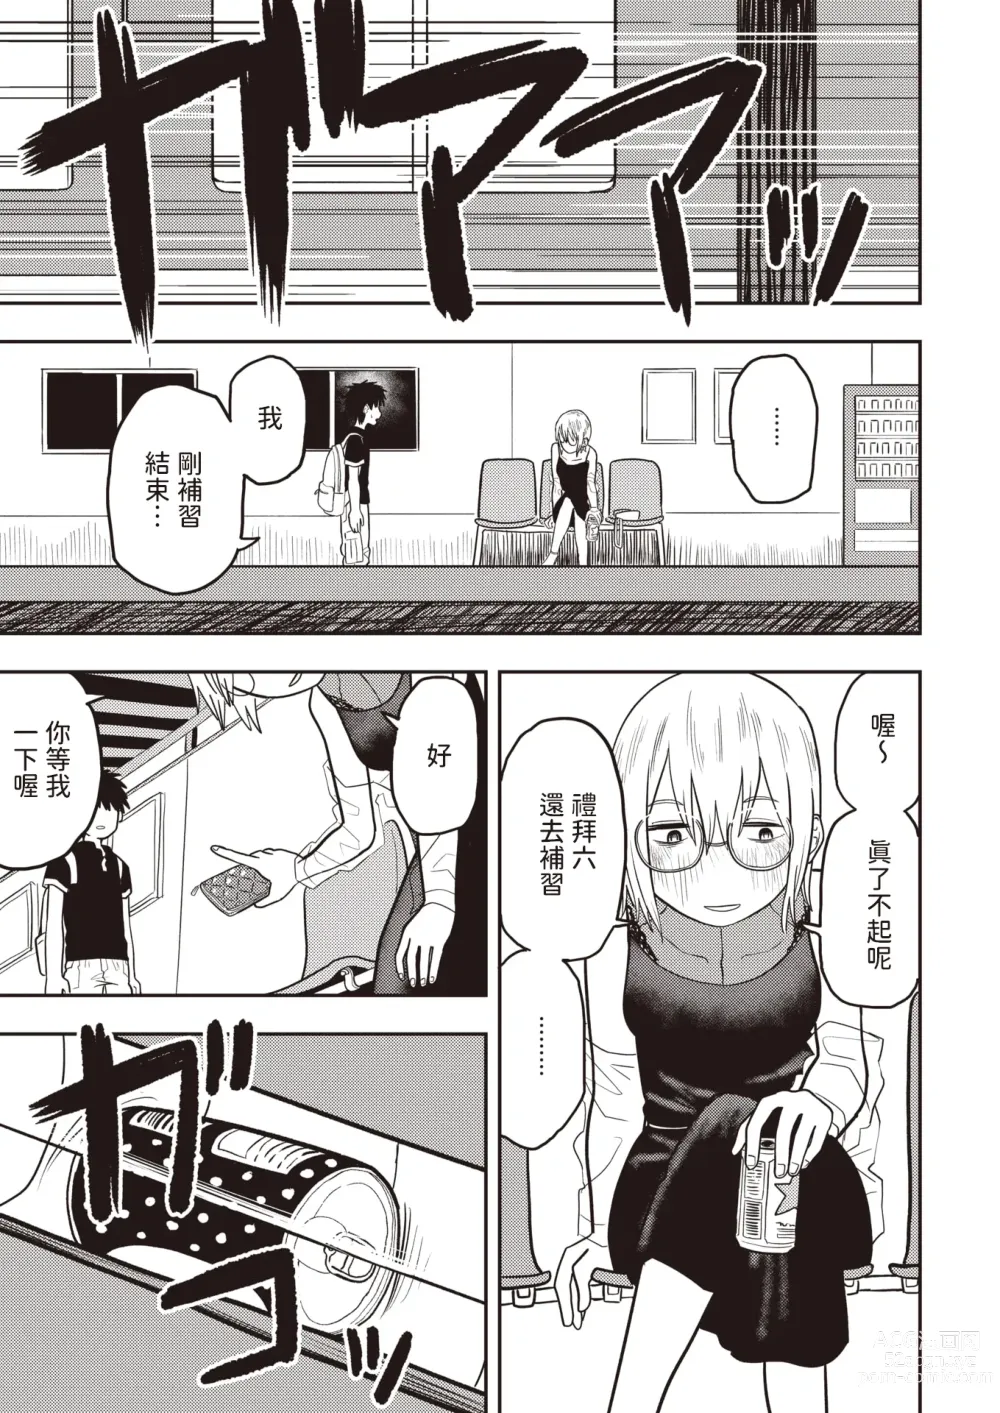 Page 5 of manga Hidoi yo Kiriyama Sensei - Thats really mean!